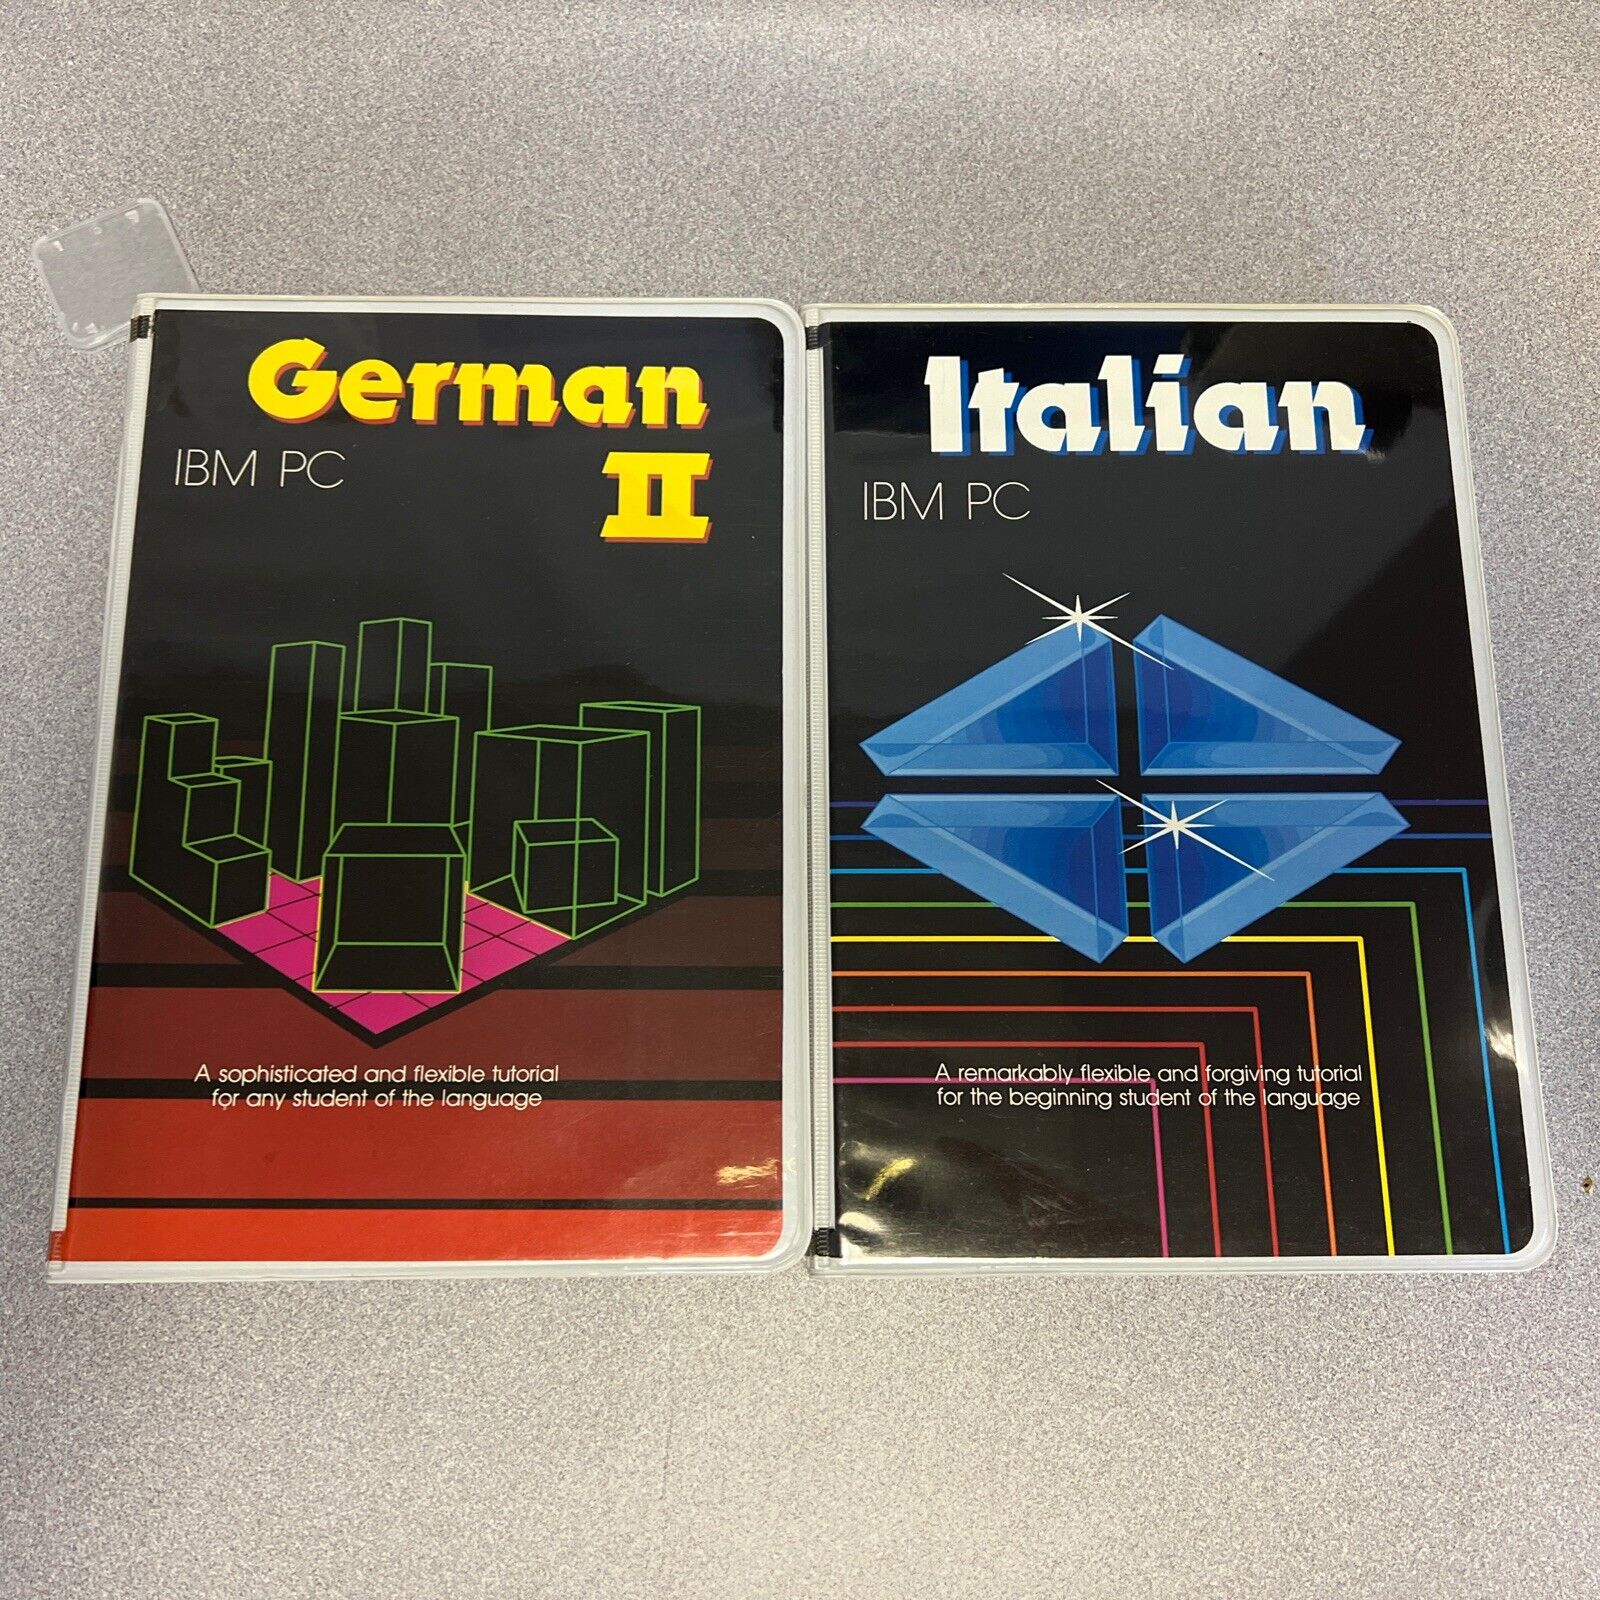  IBM PC Italian and German Software 1984 Vintage Computer